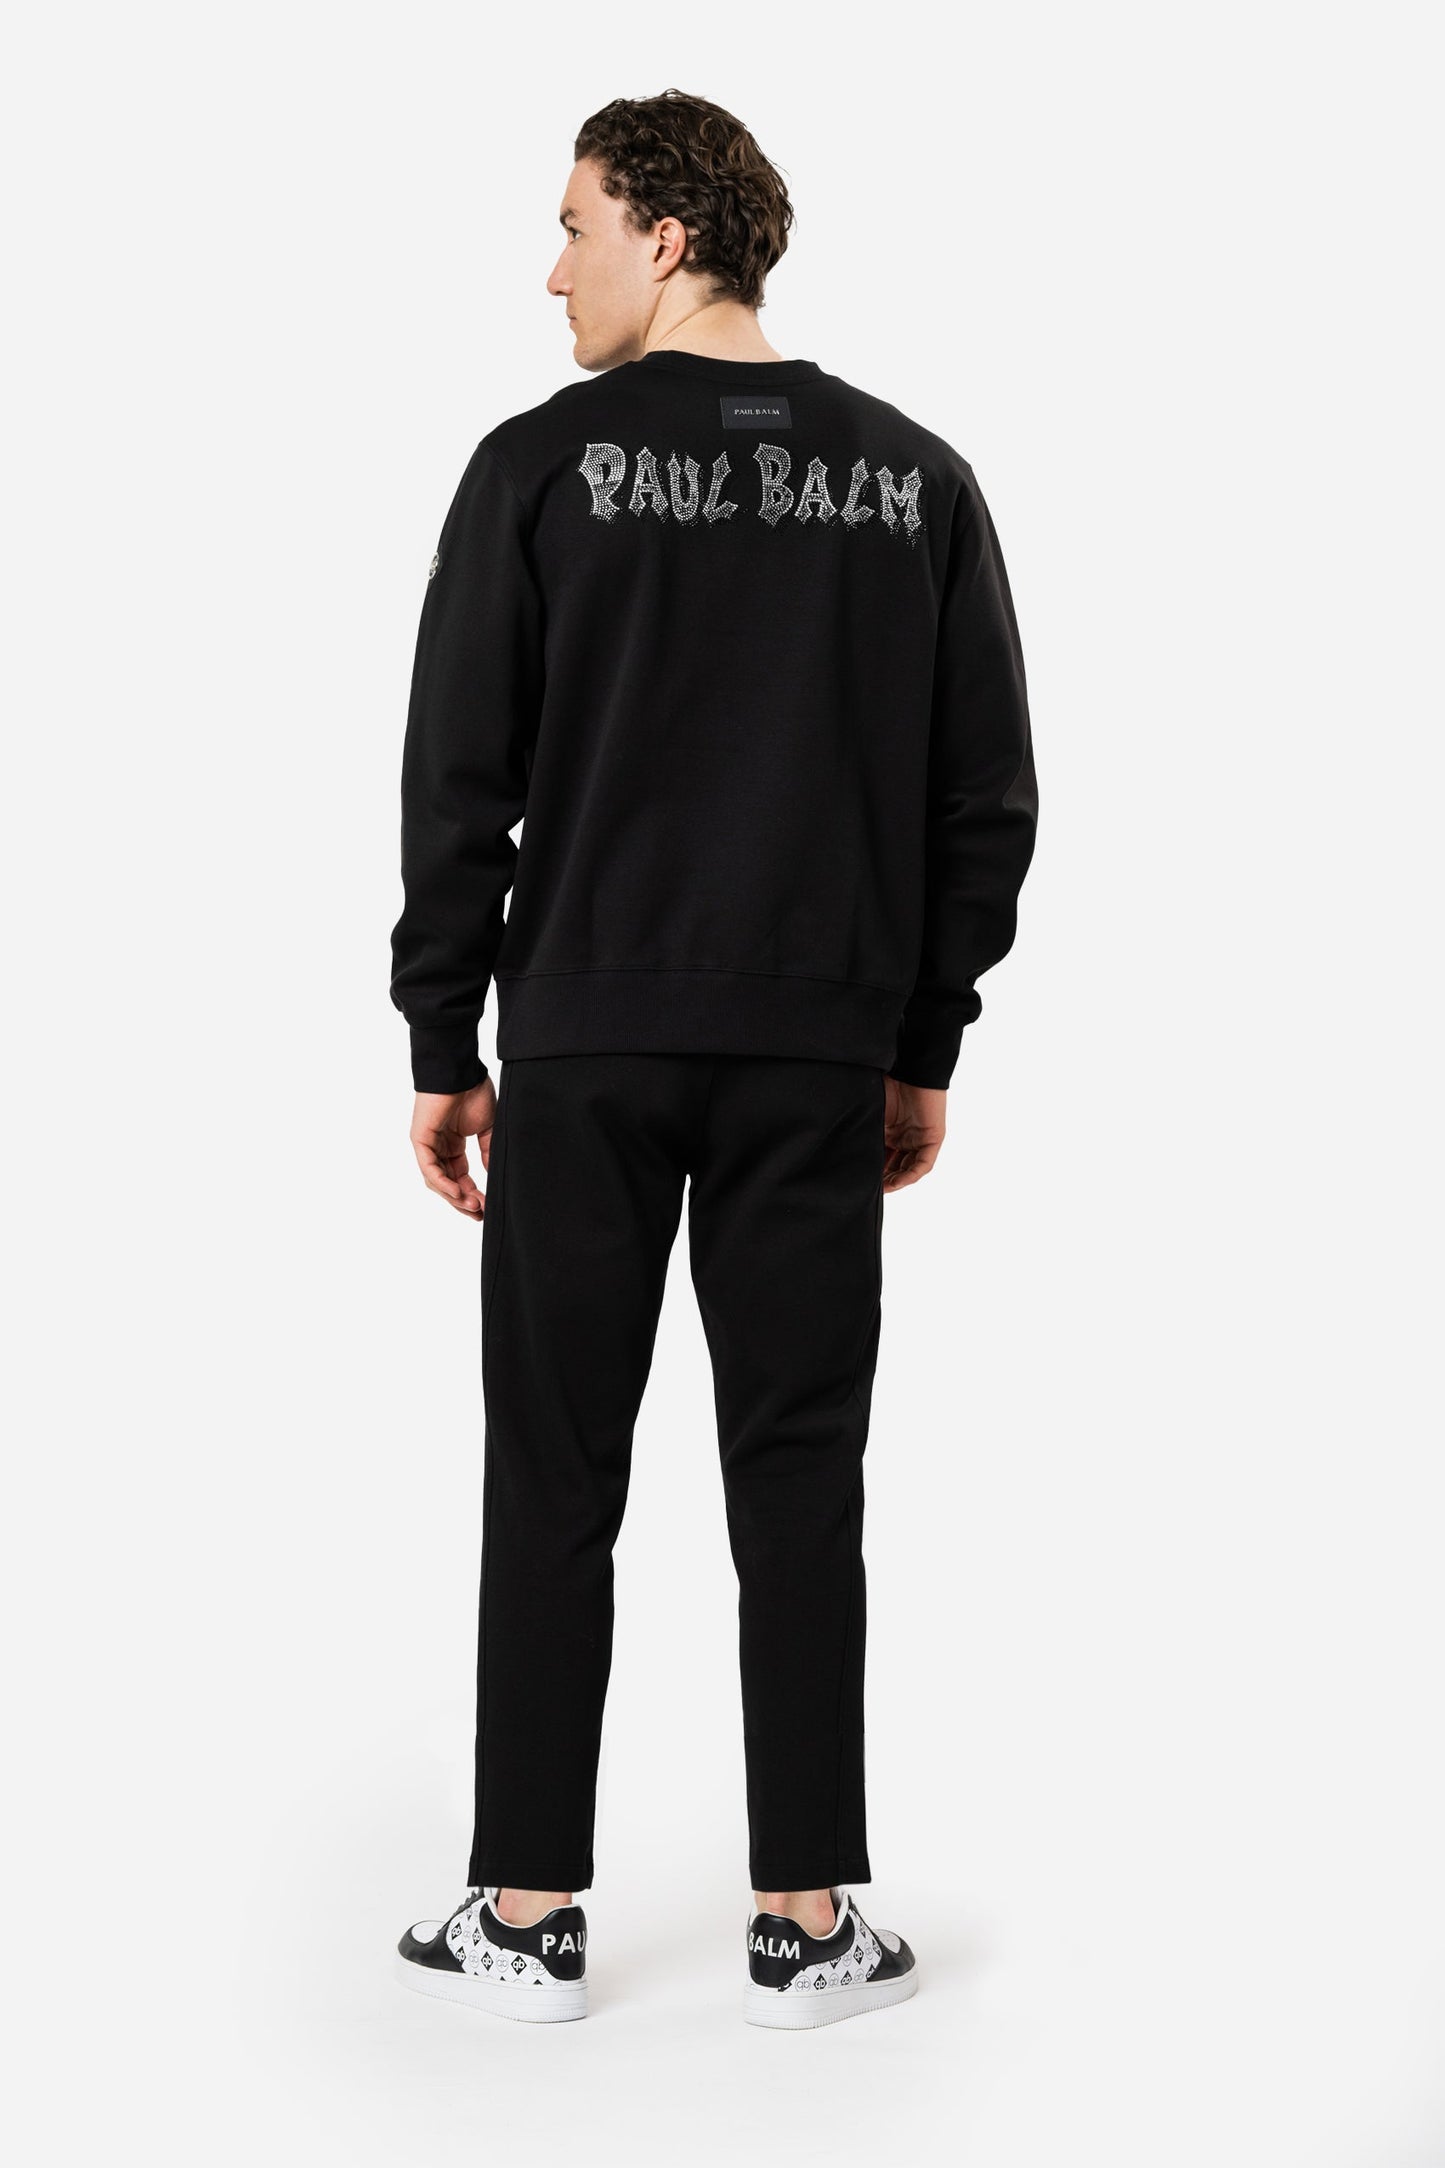 Crystal Black Kanye Sweatshirt - Limited to 300 - PAUL BALM WORLD